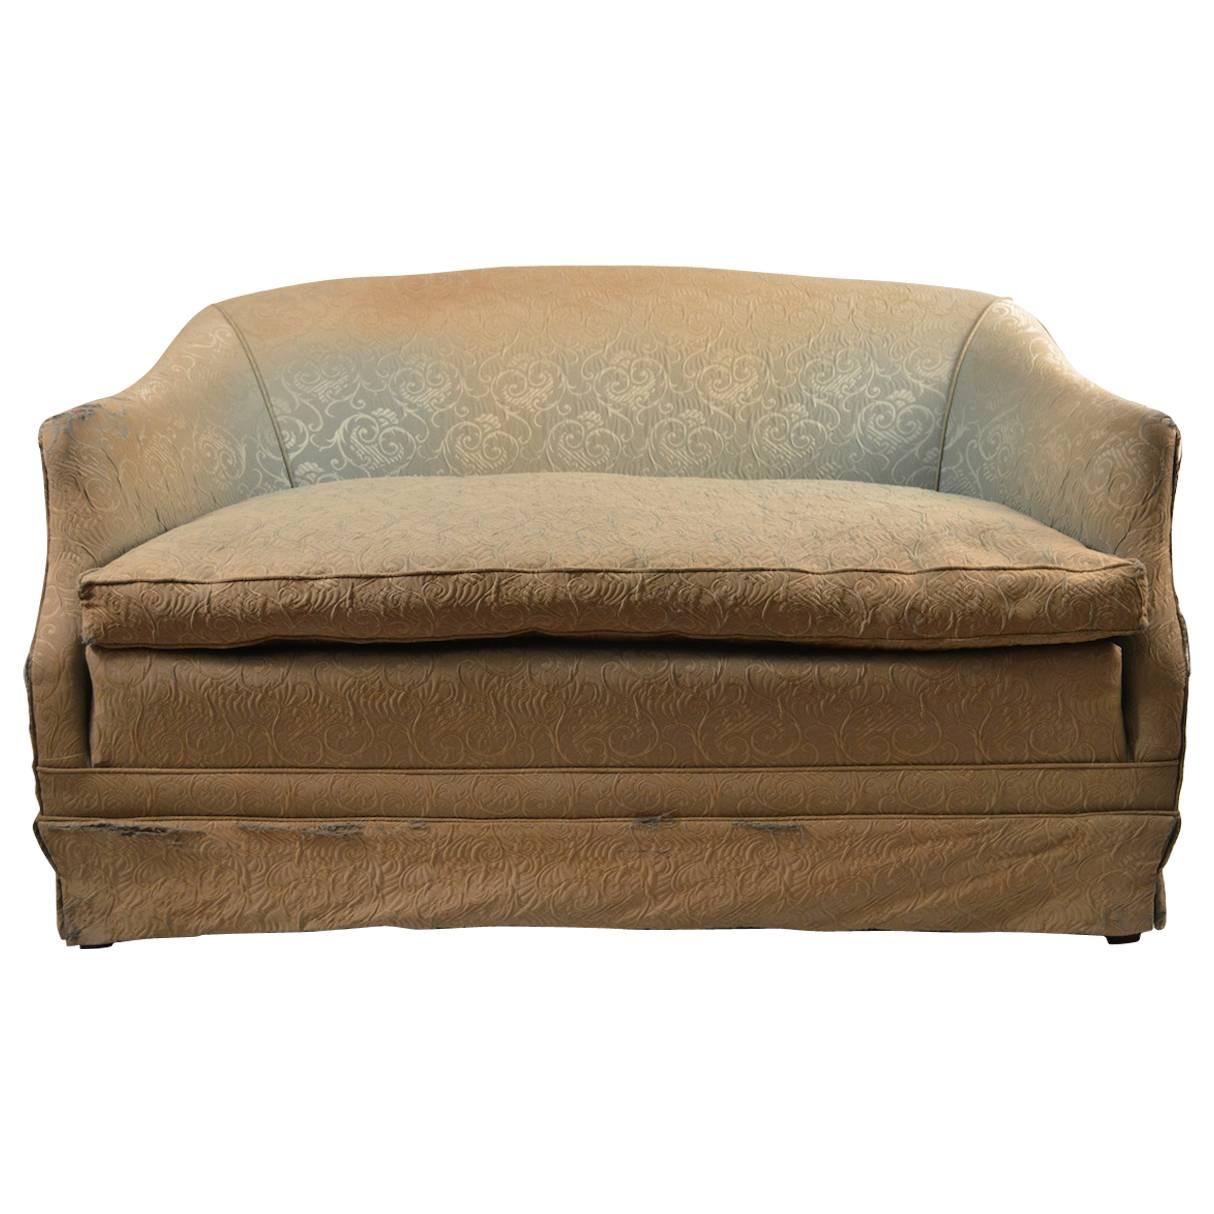 Deco Loveseat Sofa, Needs Reupholstery